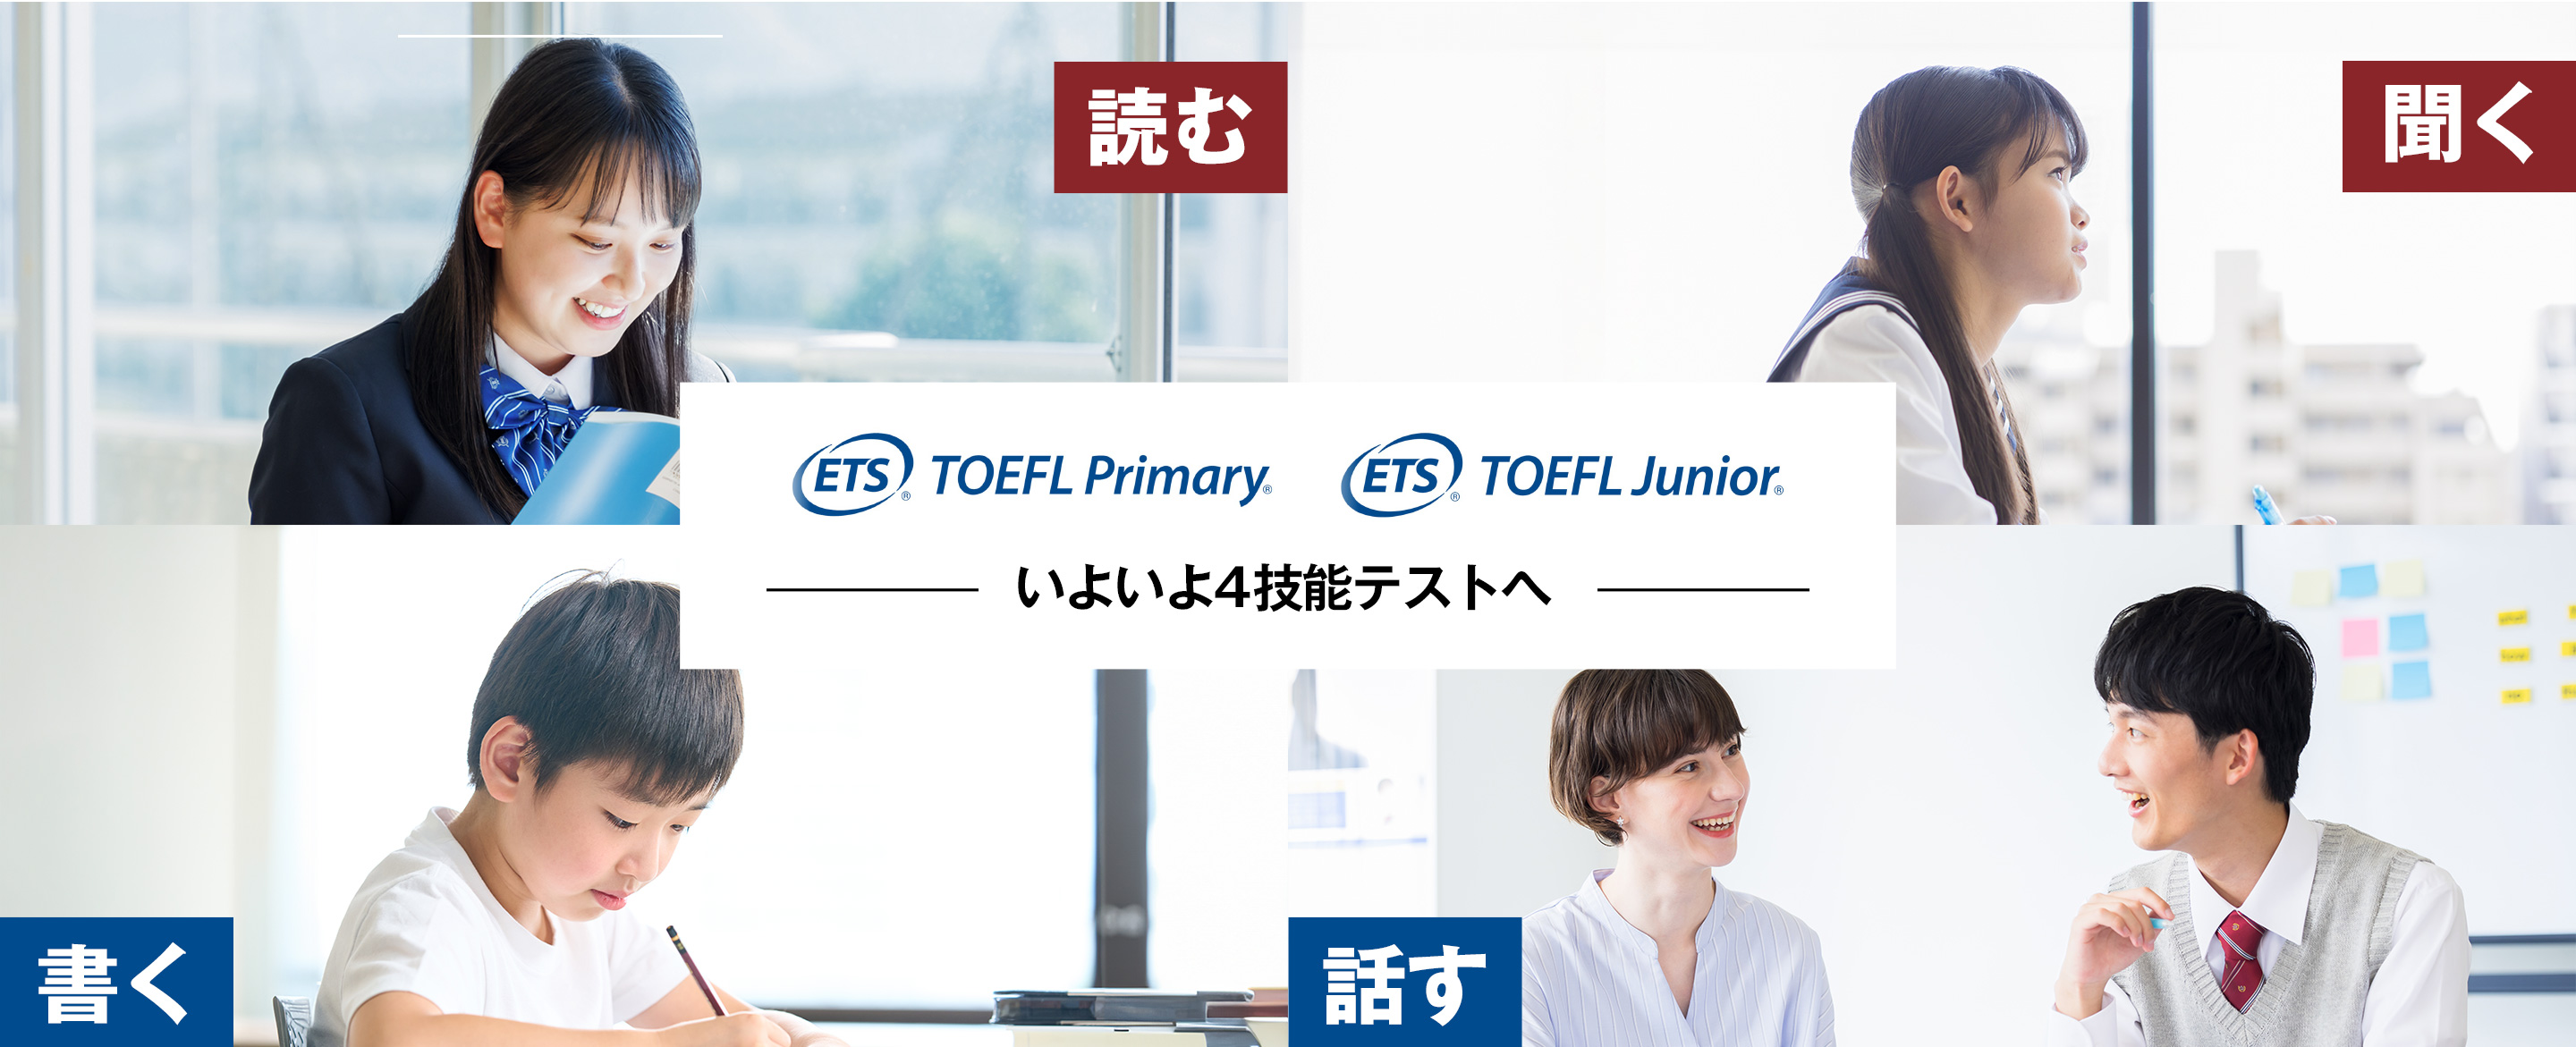 TOEFL® Young Student Seriesのすべてが4技能テストへ